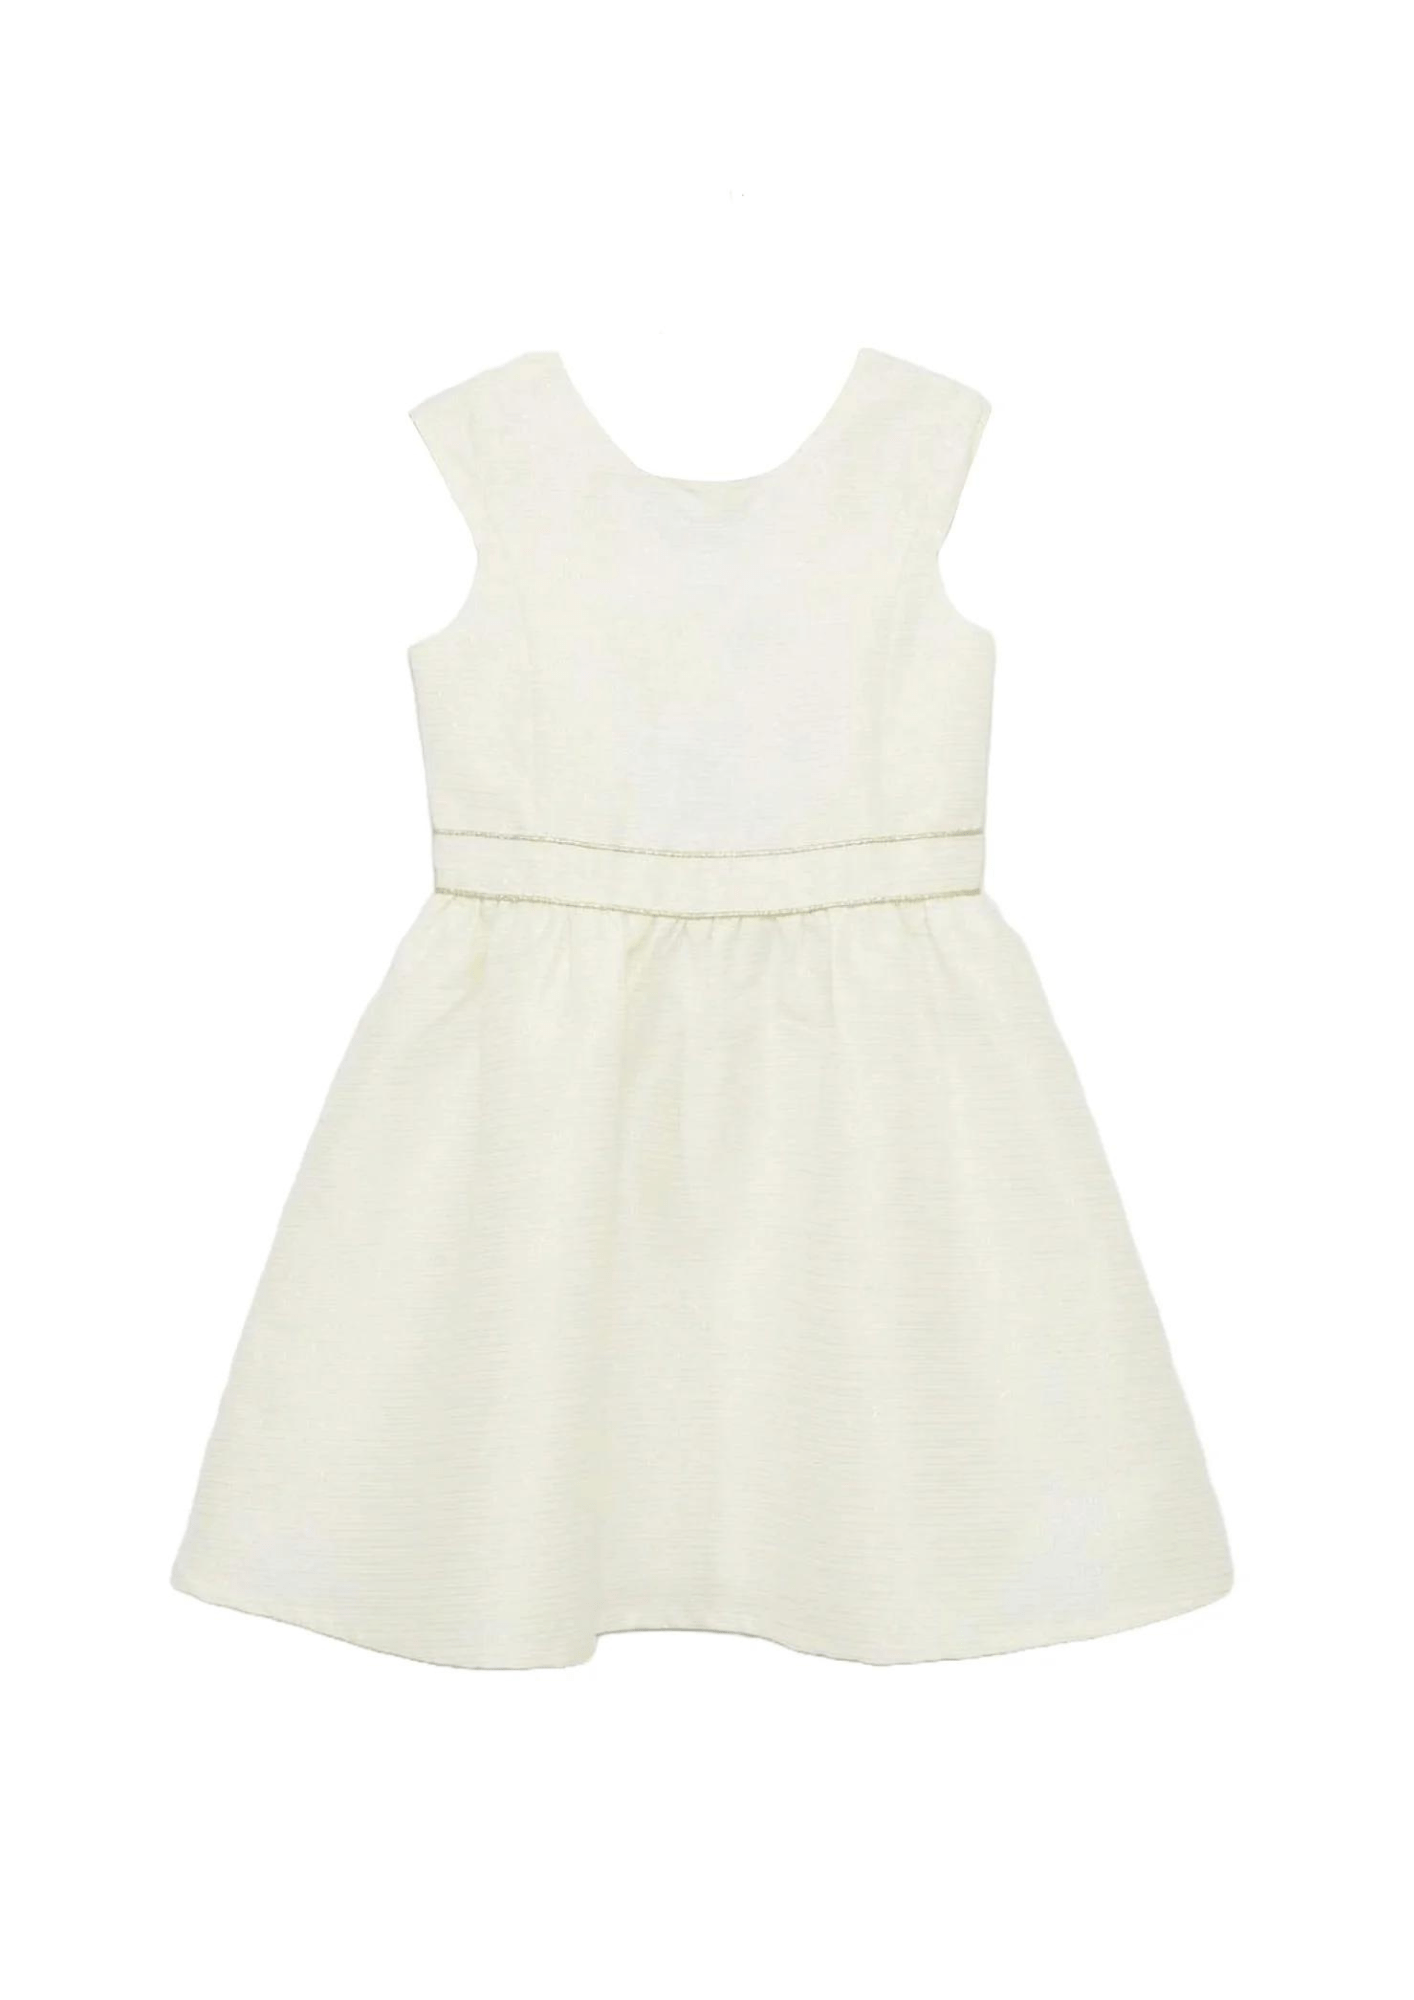 WHITE 6-YEAR OLD DRESS